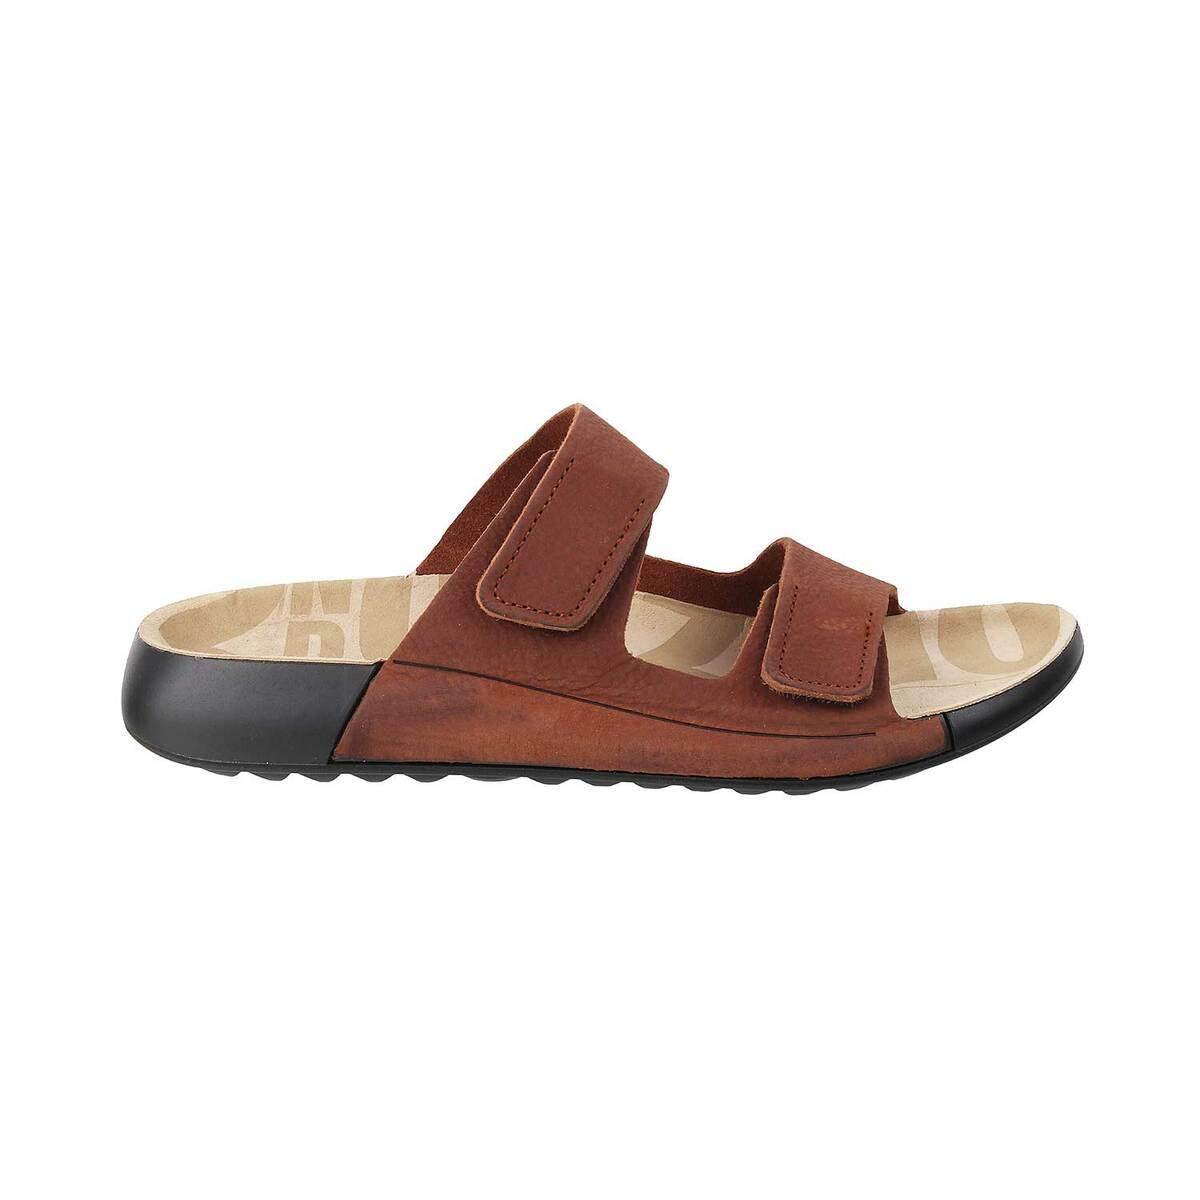 Begraafplaats De databank vitaliteit Buy Female Brown Casual Sandals Online | SKU: 340-206823-12-37-Metro Shoes